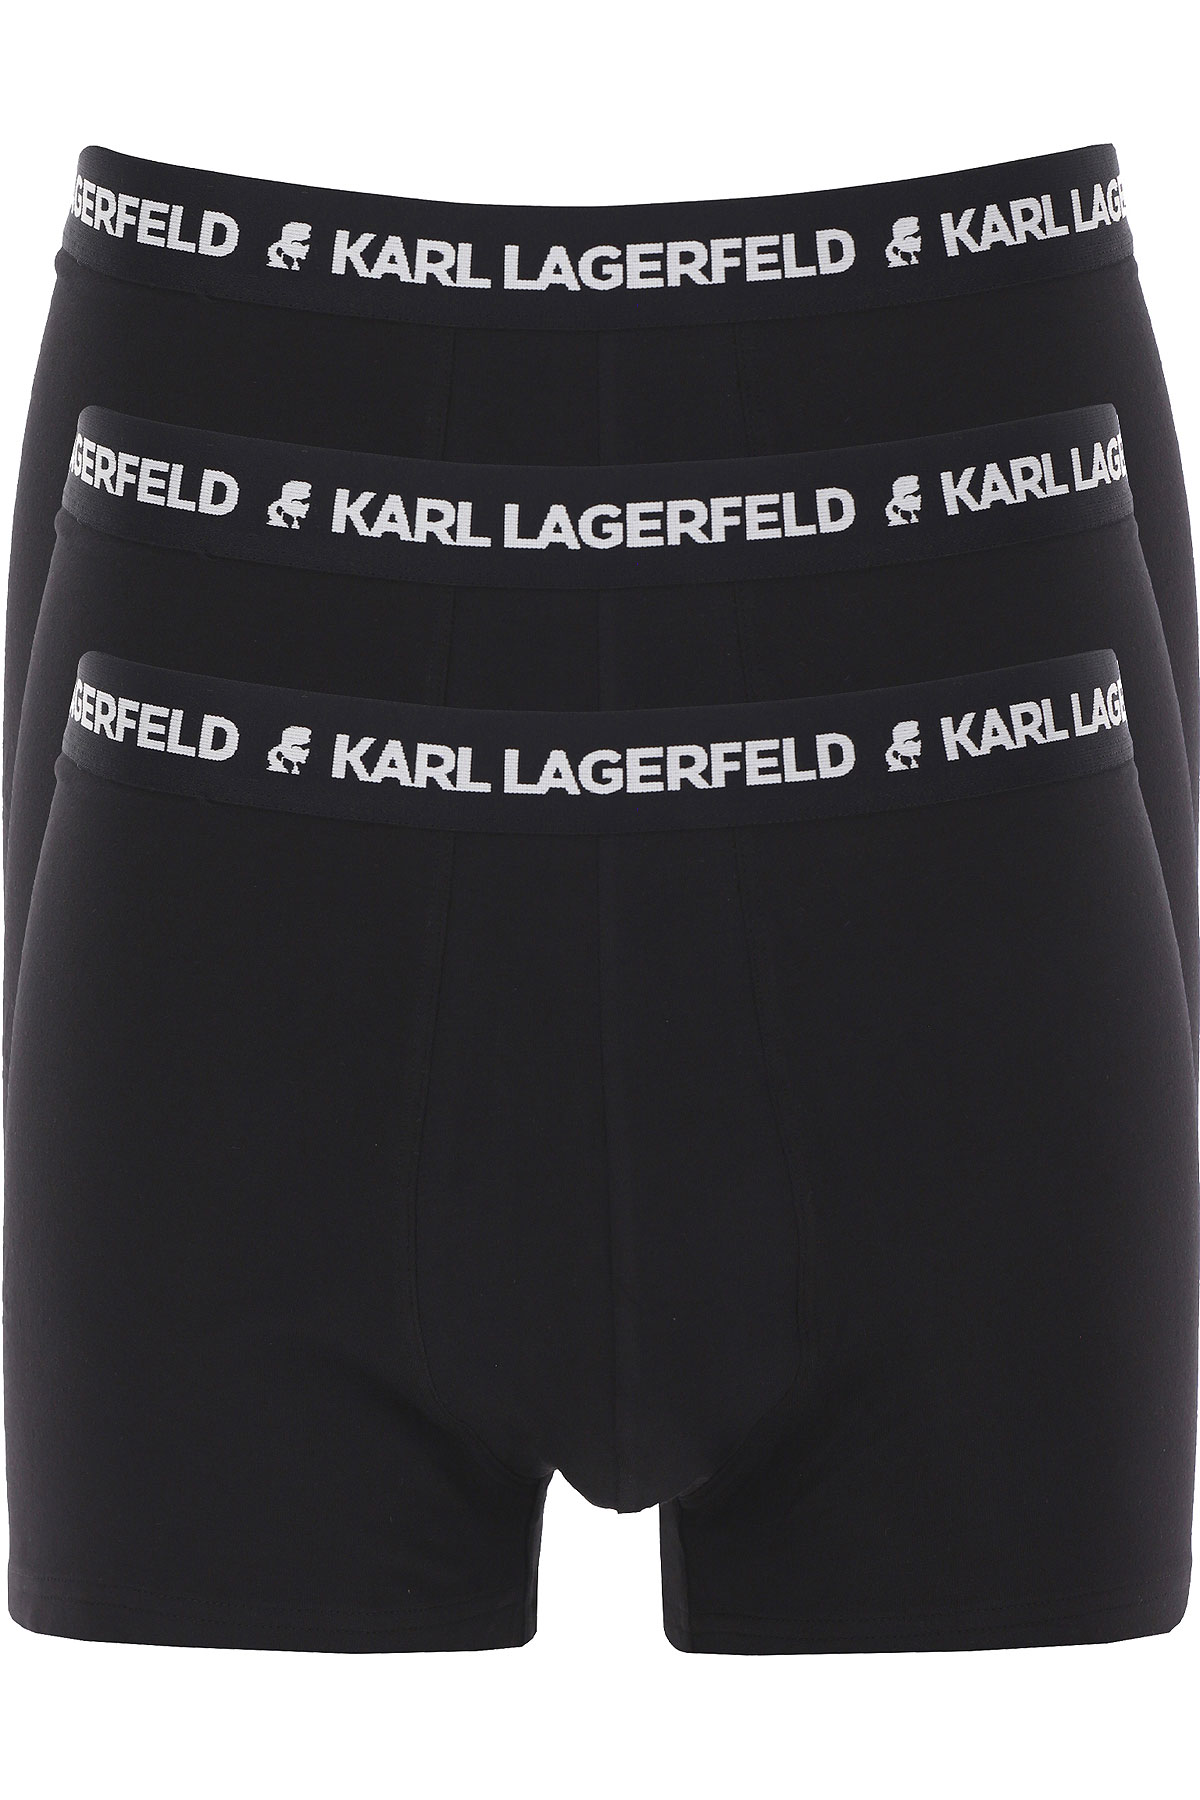 humor onaangenaam Overgave Mens Underwear Karl Lagerfeld, Style code: 211m2102-999-